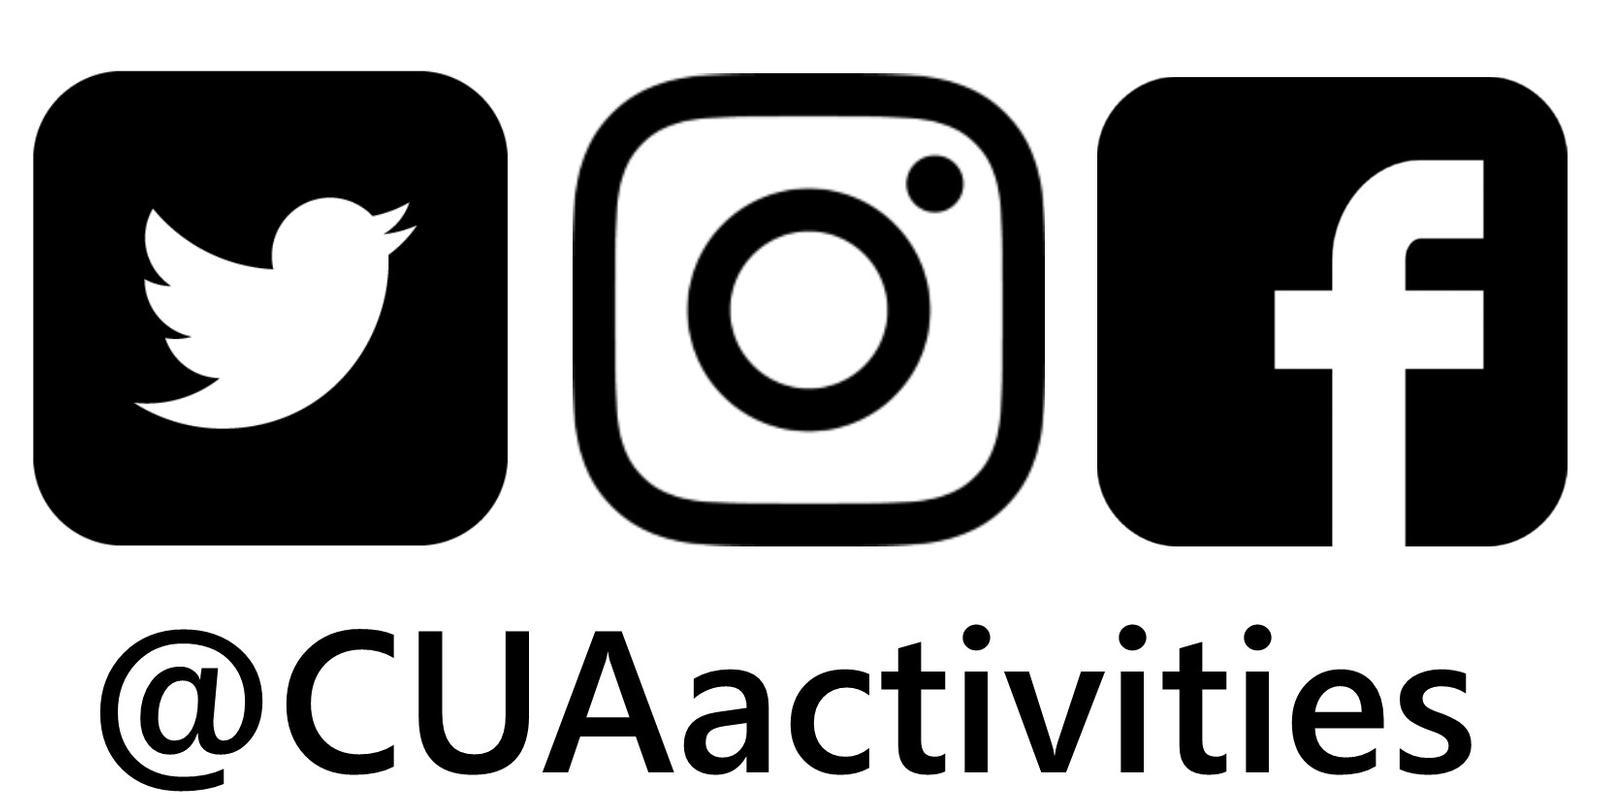 Facebook and Instagram Logo - Facebook and Instagram Logo Clip Art